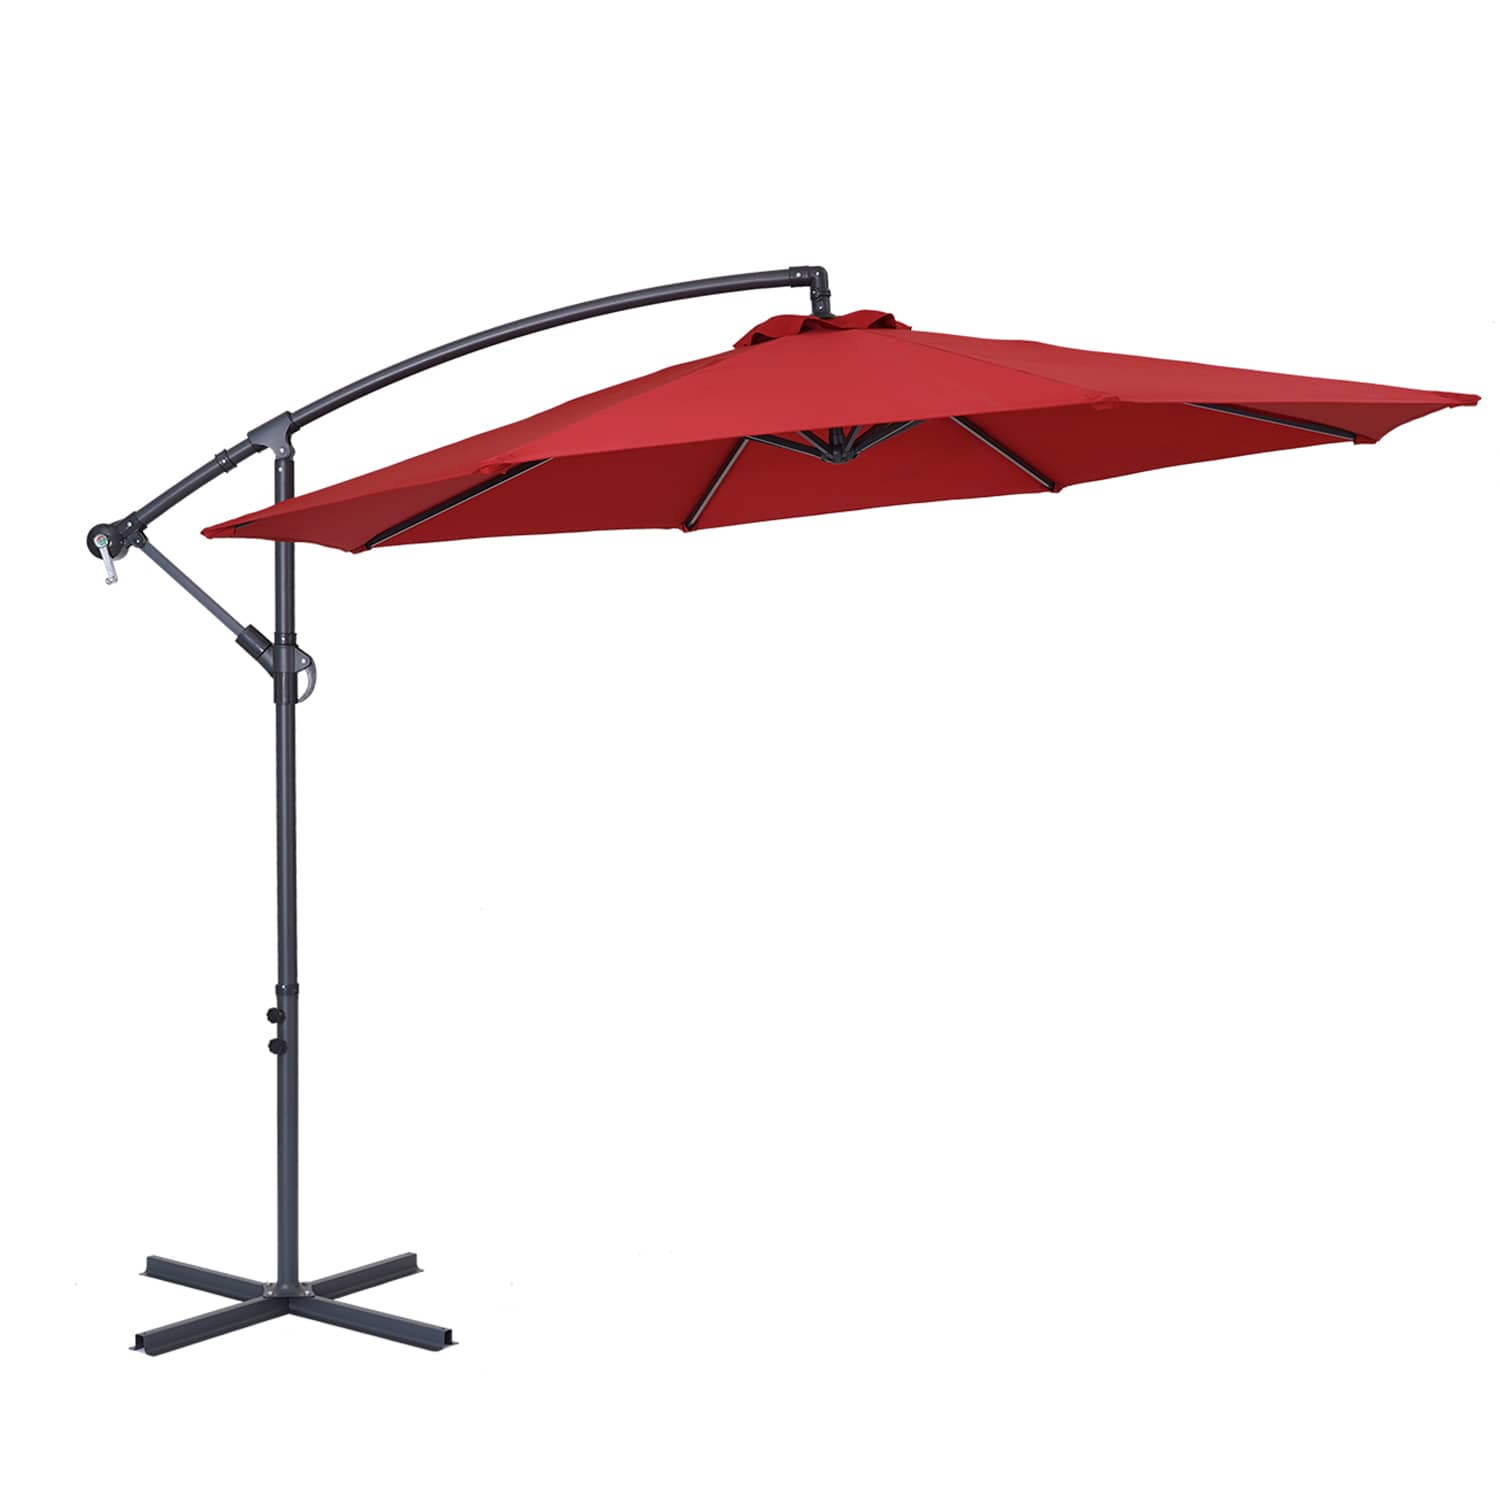 CASAINC 10 Ft. Offset Patio Umbrella Without Umbrella Base